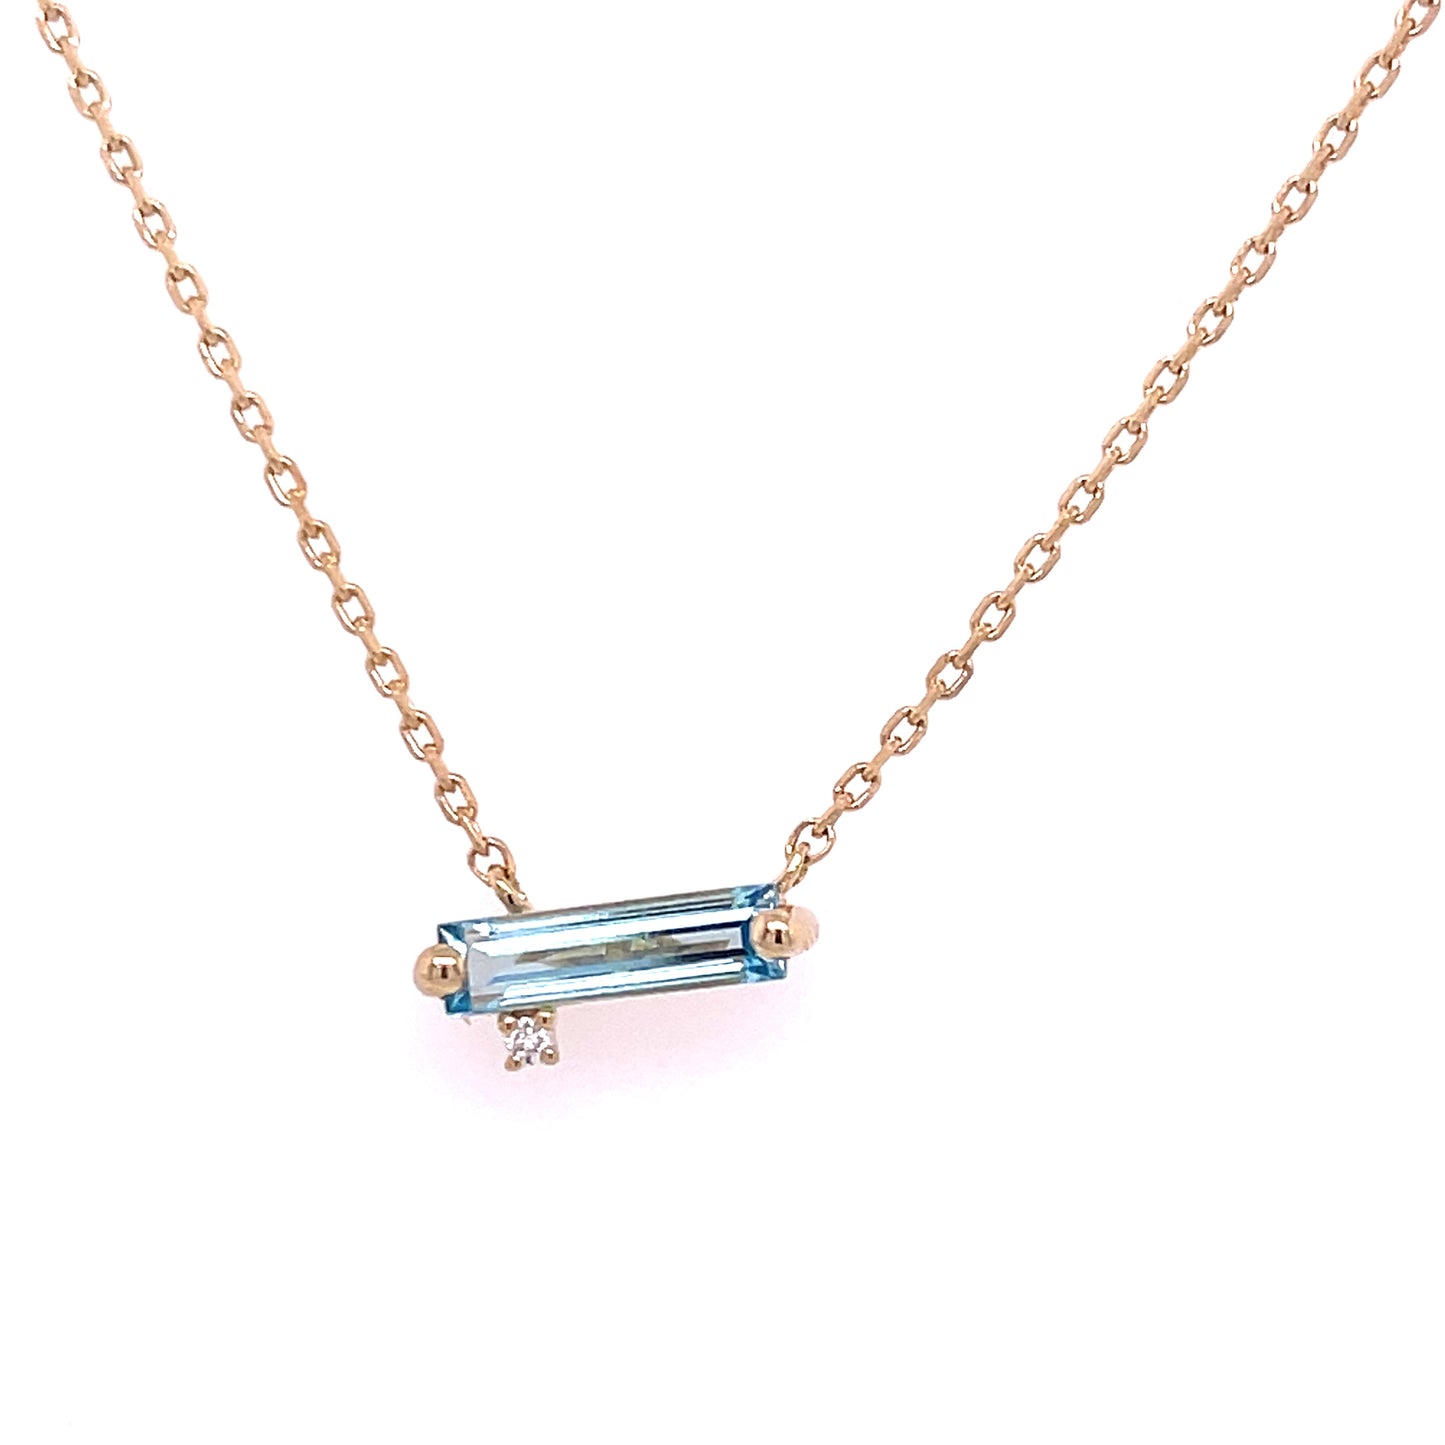 Baguette Cut Necklace with Diamond Accent